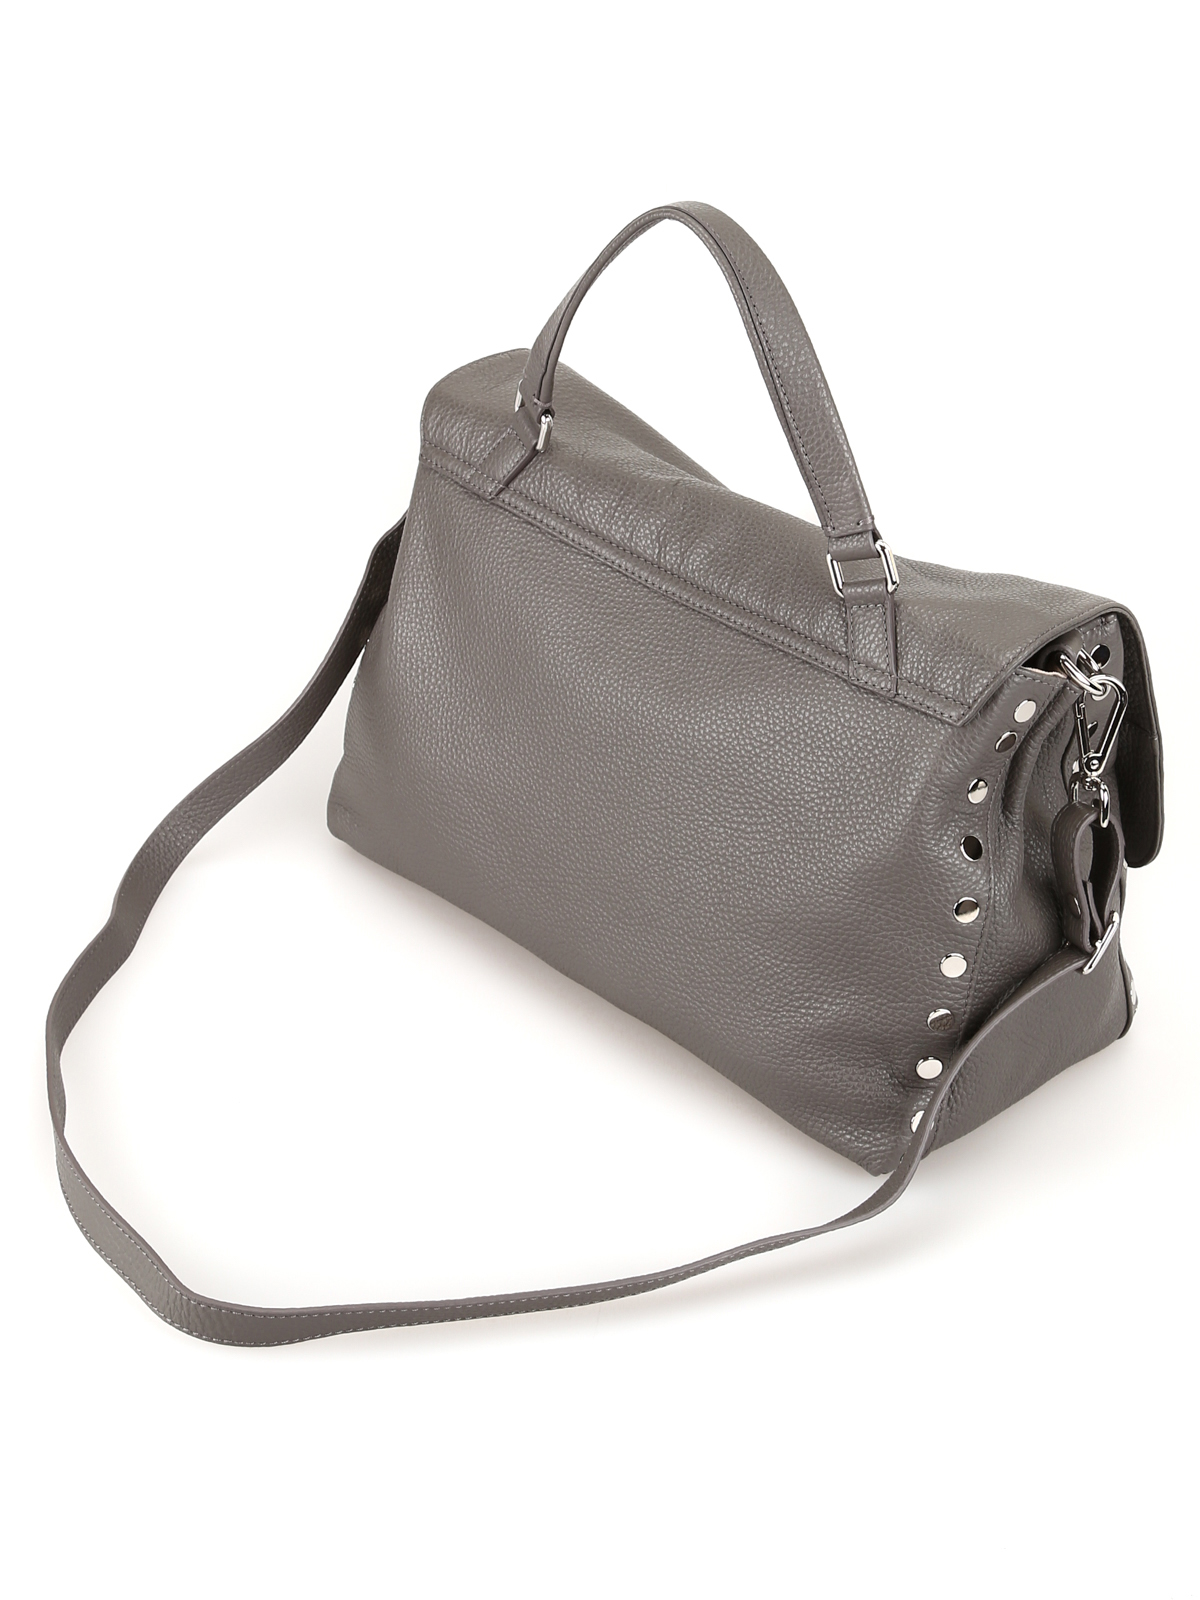 Totes bags Zanellato - Postina M Daily grained leather bag 